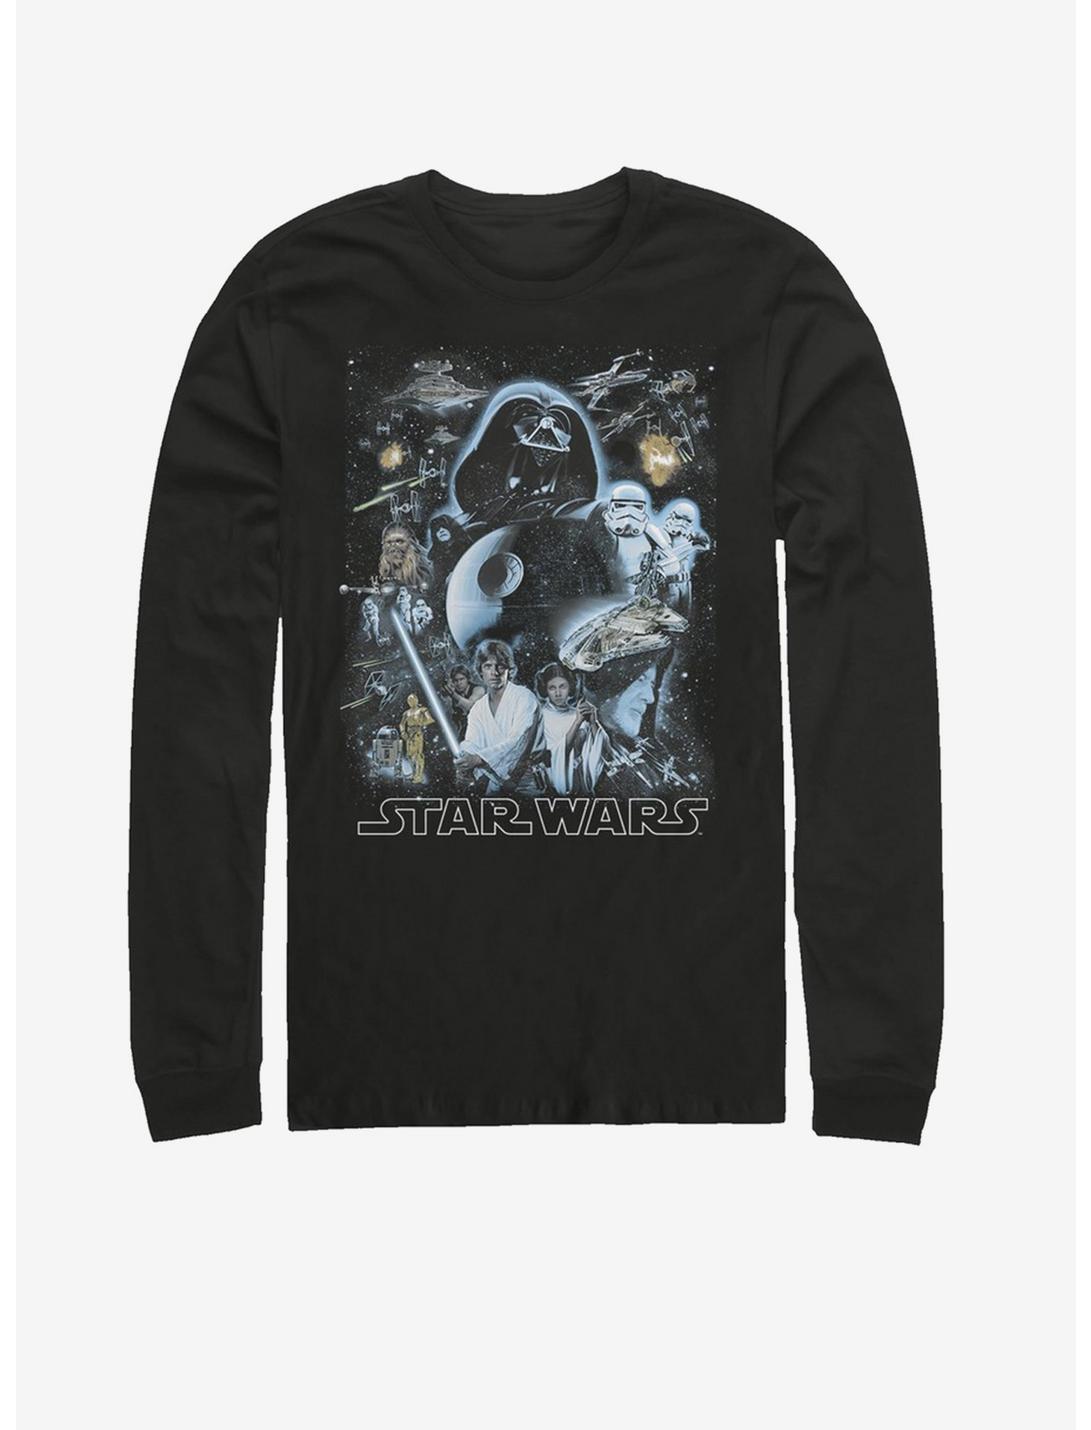 Star Wars Galaxy of Stars Long-Sleeve T-Shirt, BLACK, hi-res